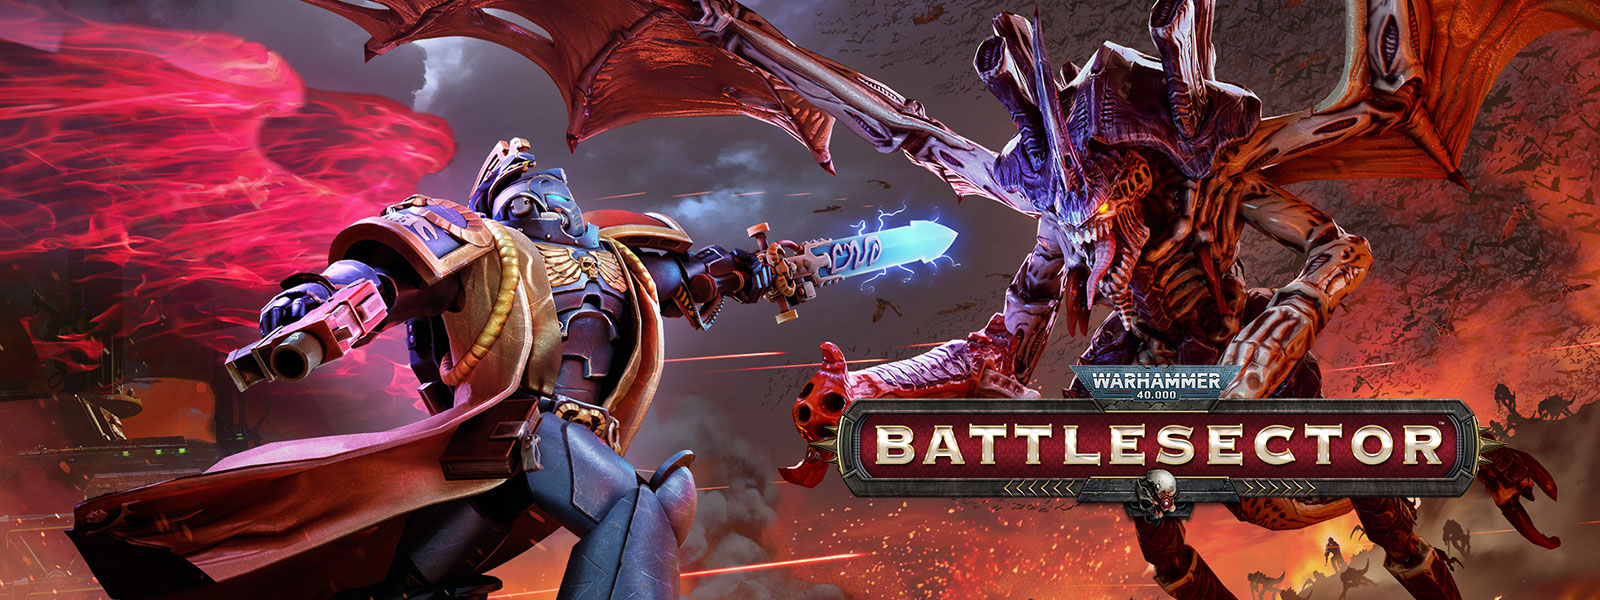 《Warhammer 40,000: Battlesector》，一位图书管理员在战斗中遇到了虫巢暴君。